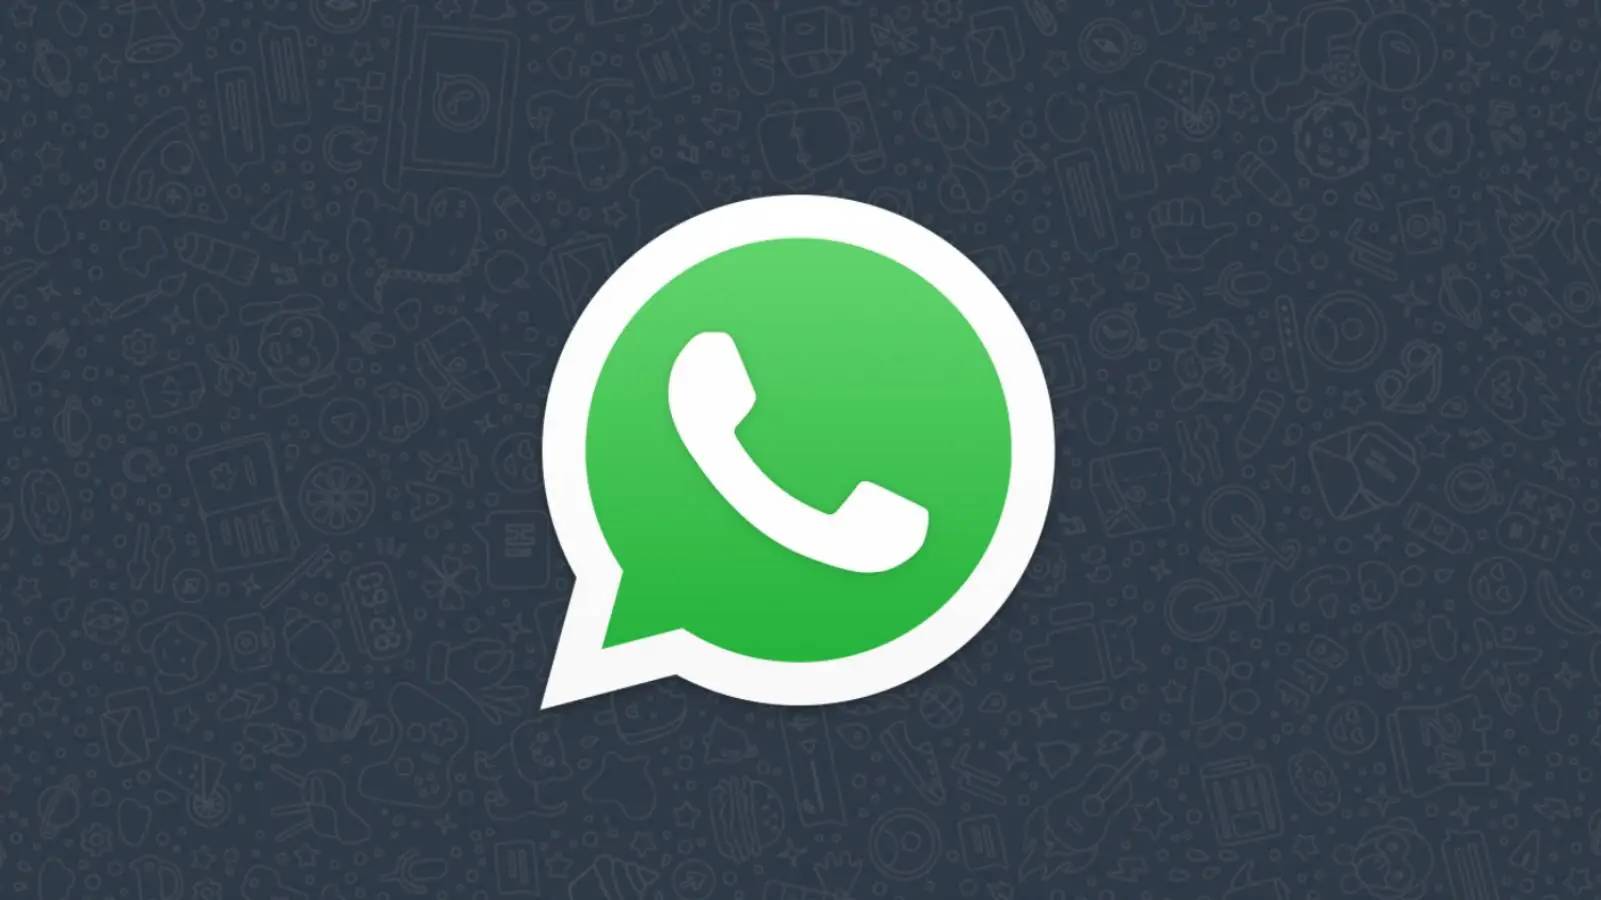 WhatsApp-kanaalwaarschuwingen